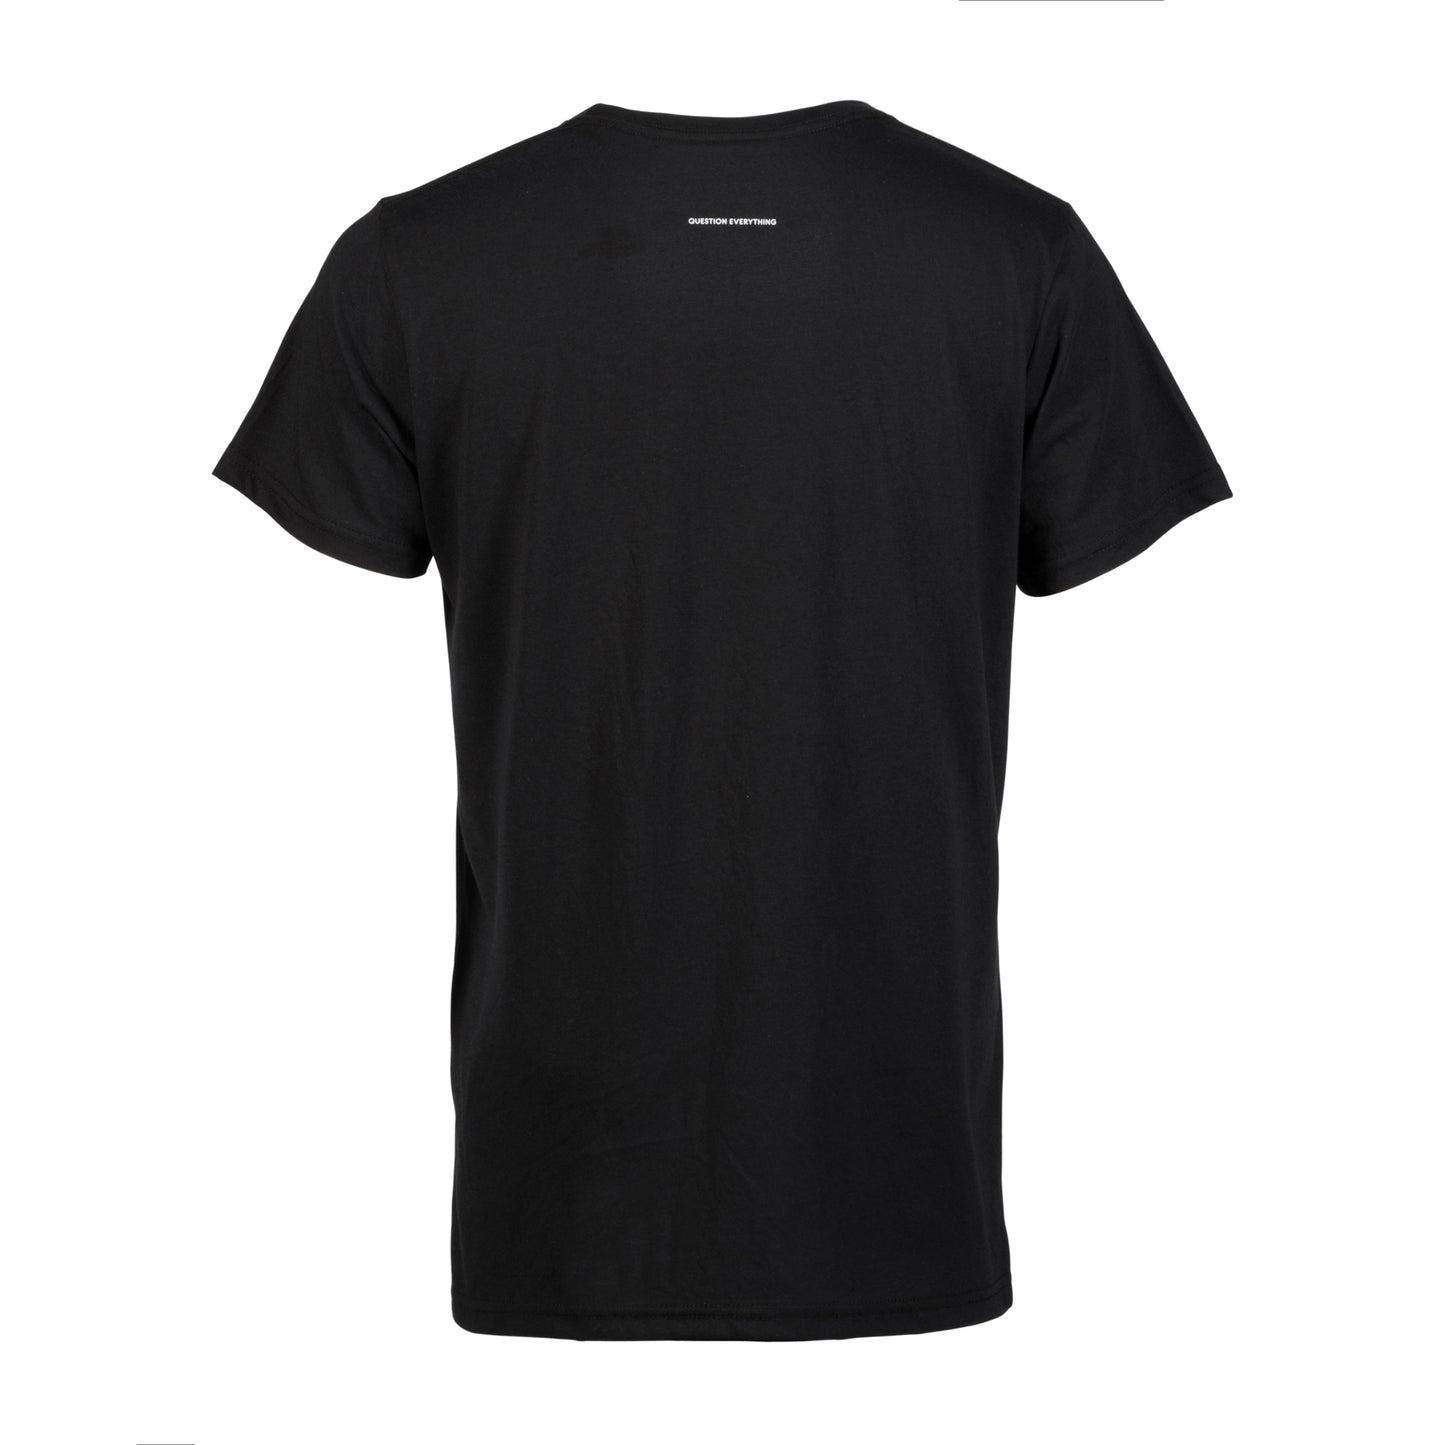 SPYSCAPE New York T-shirt - 